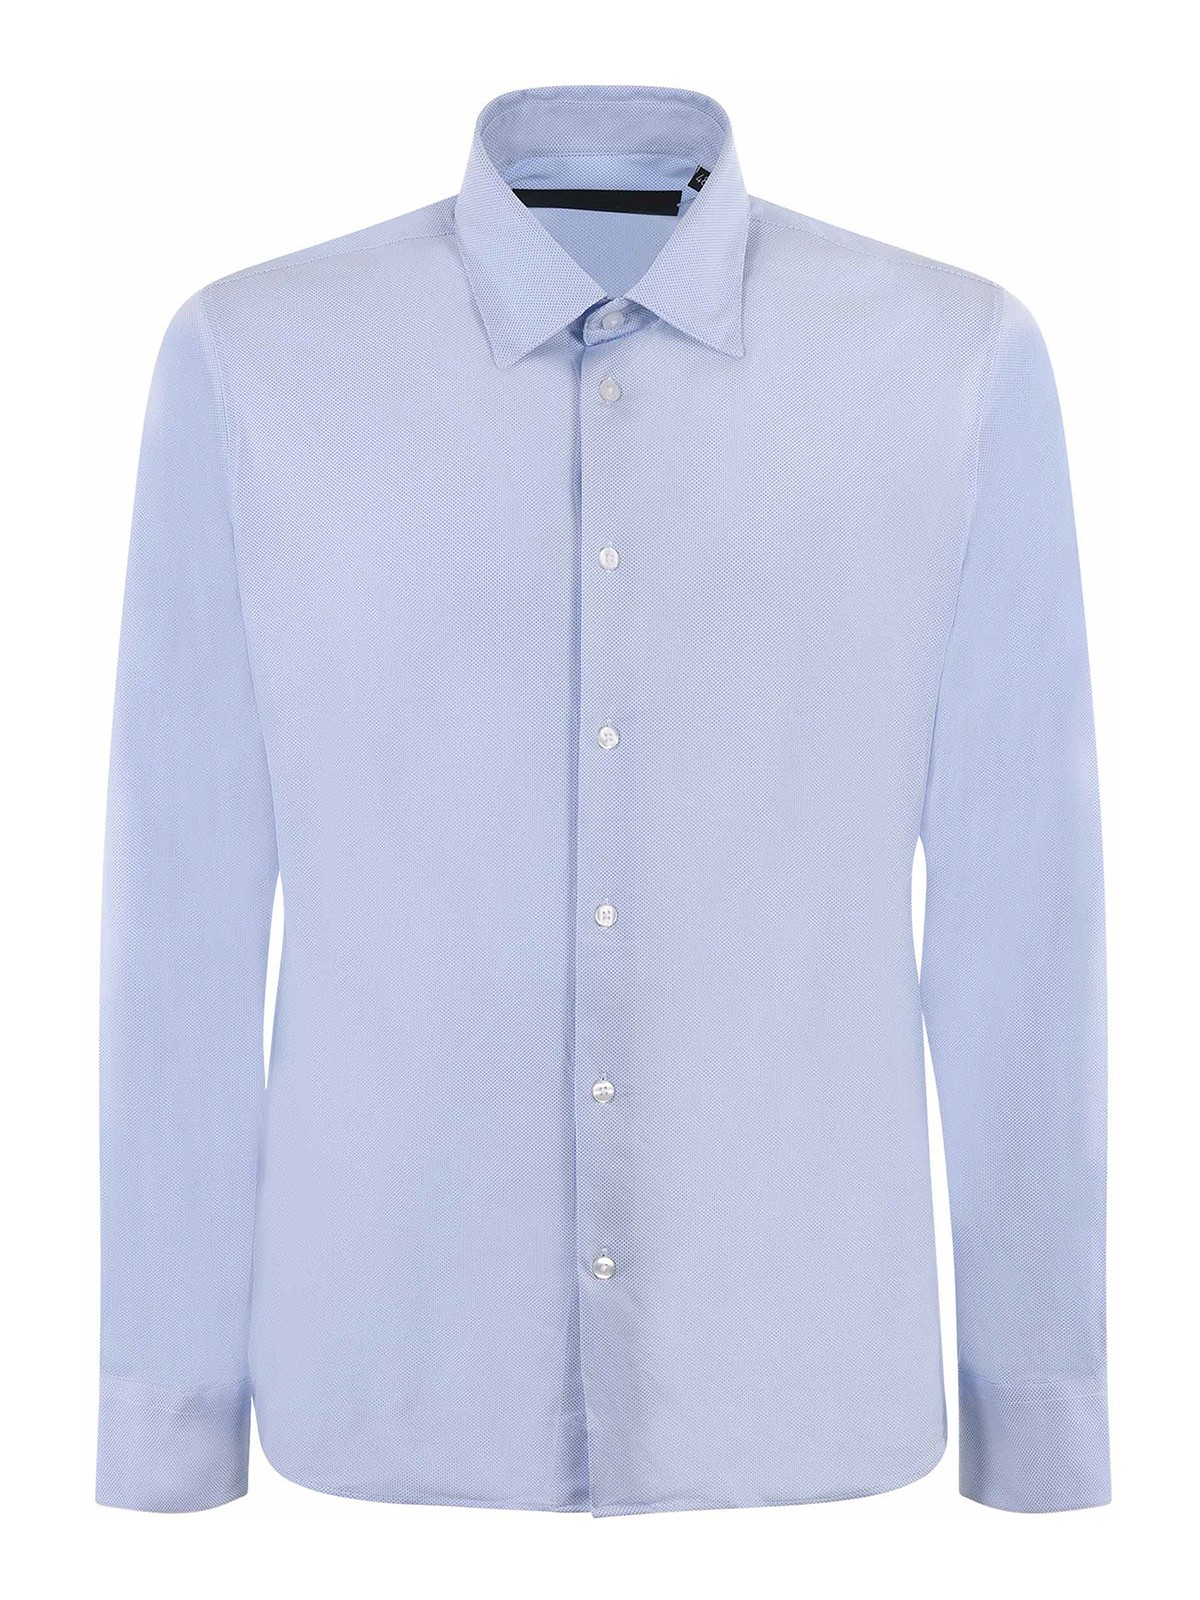 Rrd Roberto Ricci Designs Cotton Shirt In Light Blue